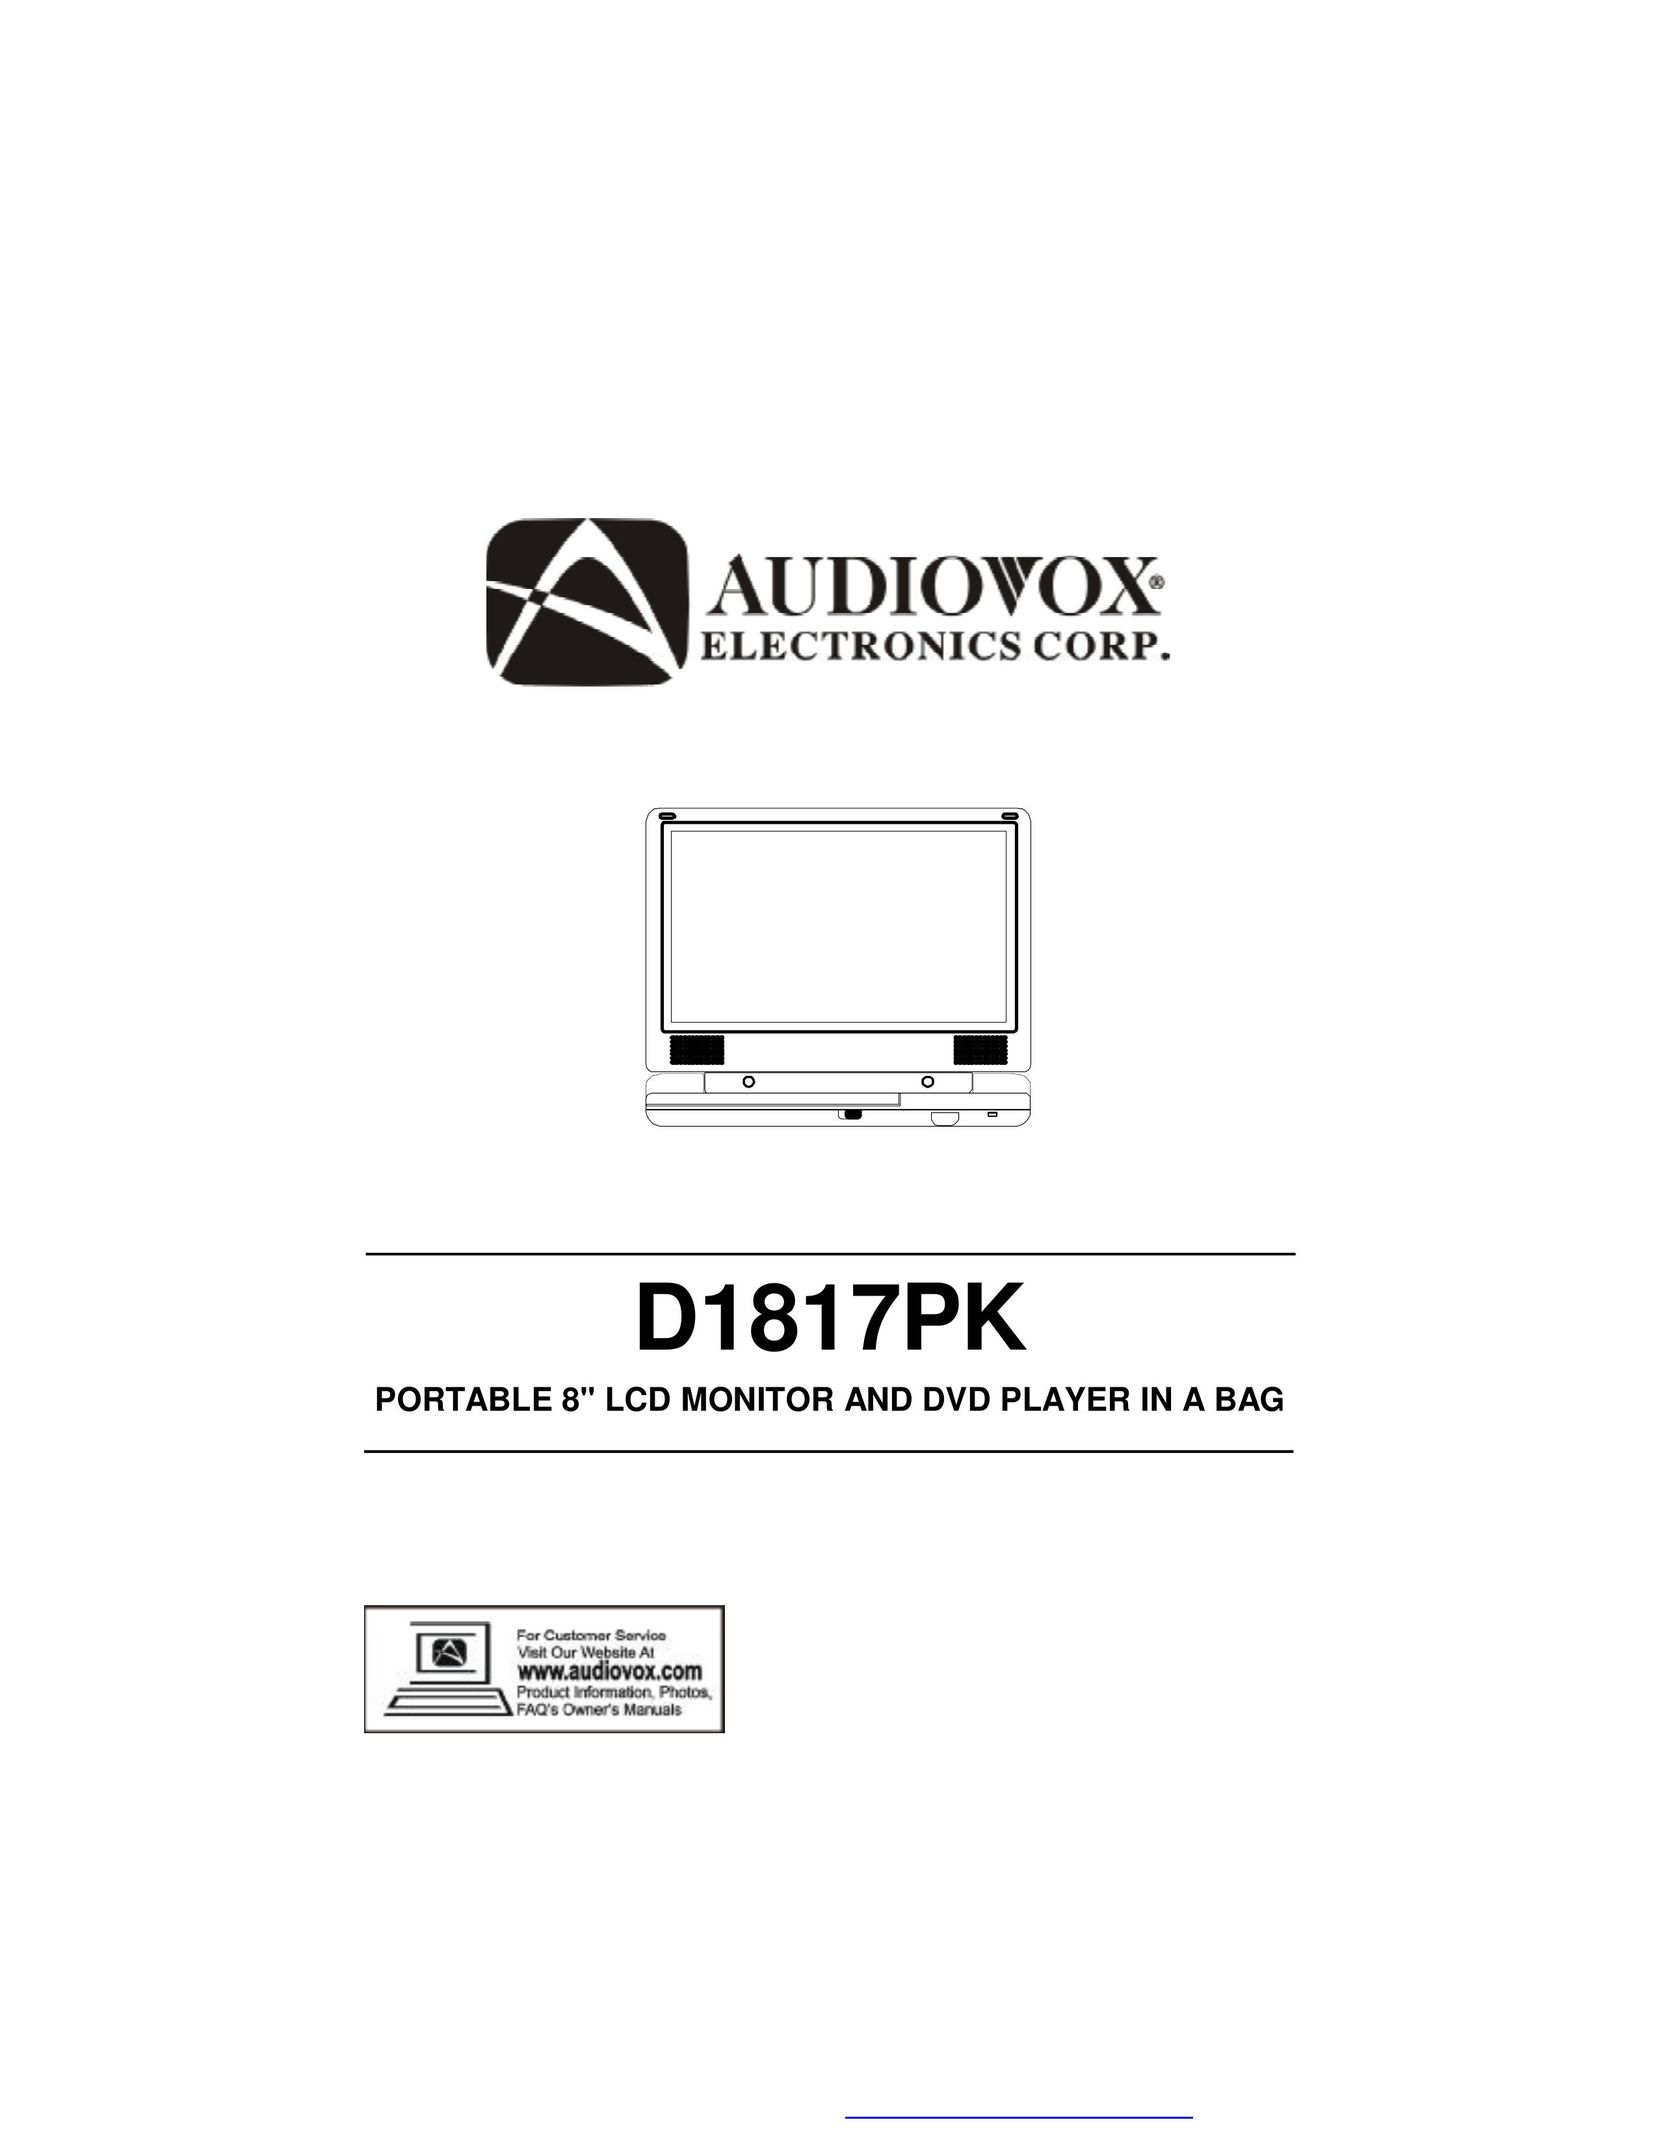 Audiovox D1817PK Portable DVD Player User Manual